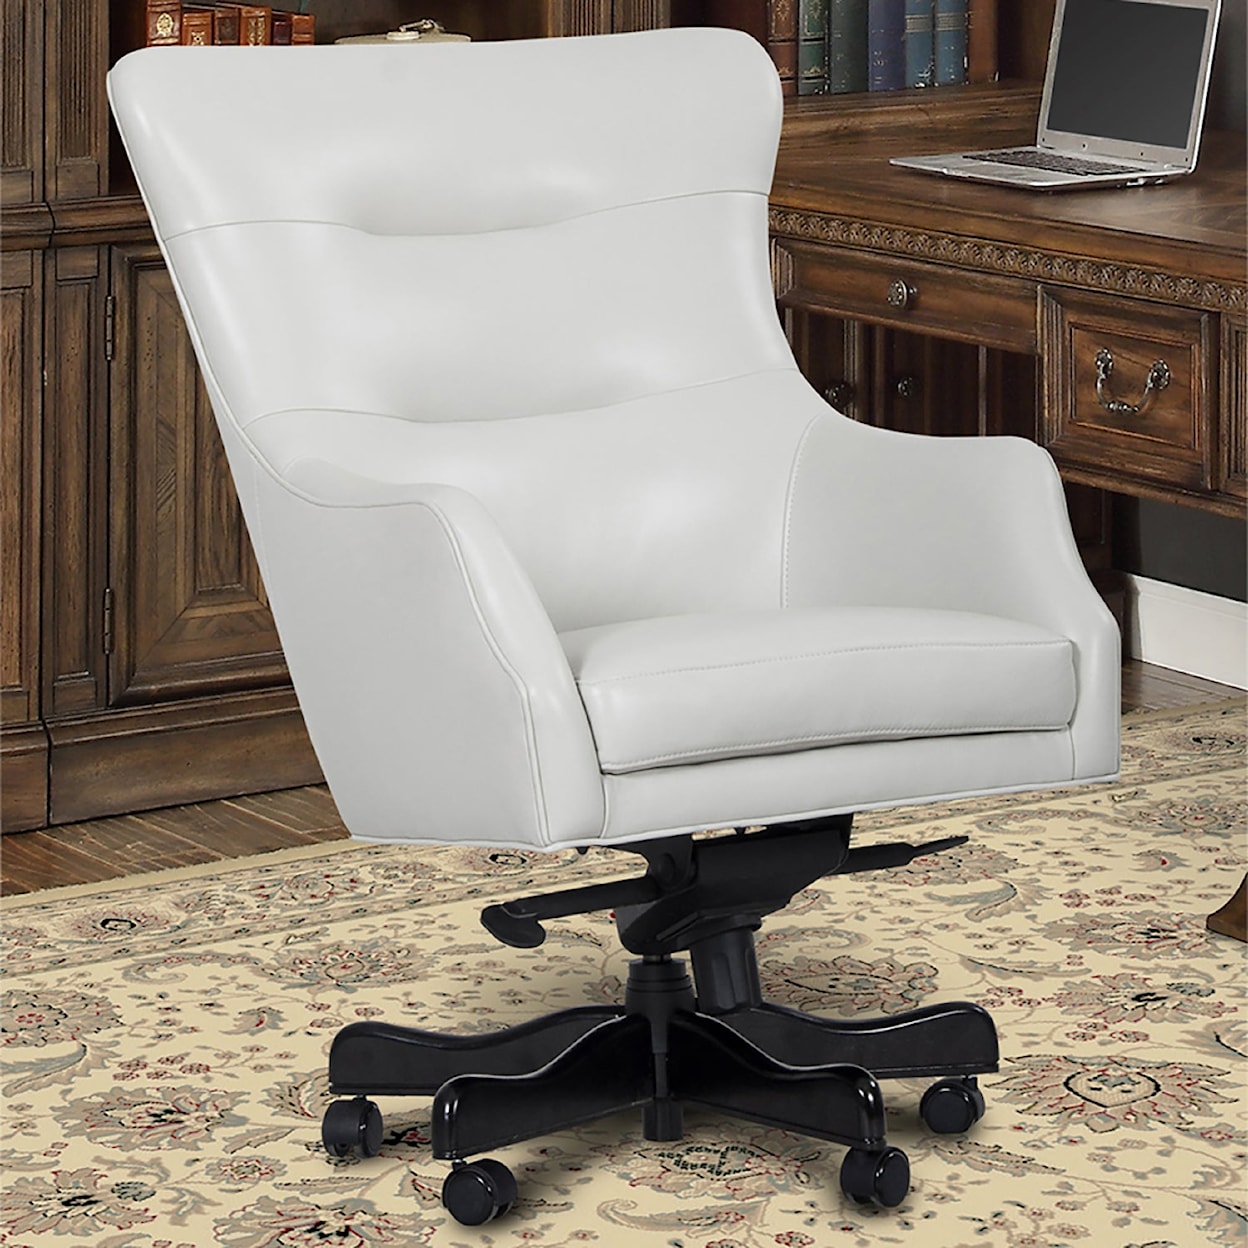 Paramount Living Dc#122-Ala - Desk Chair Leather Desk Chair